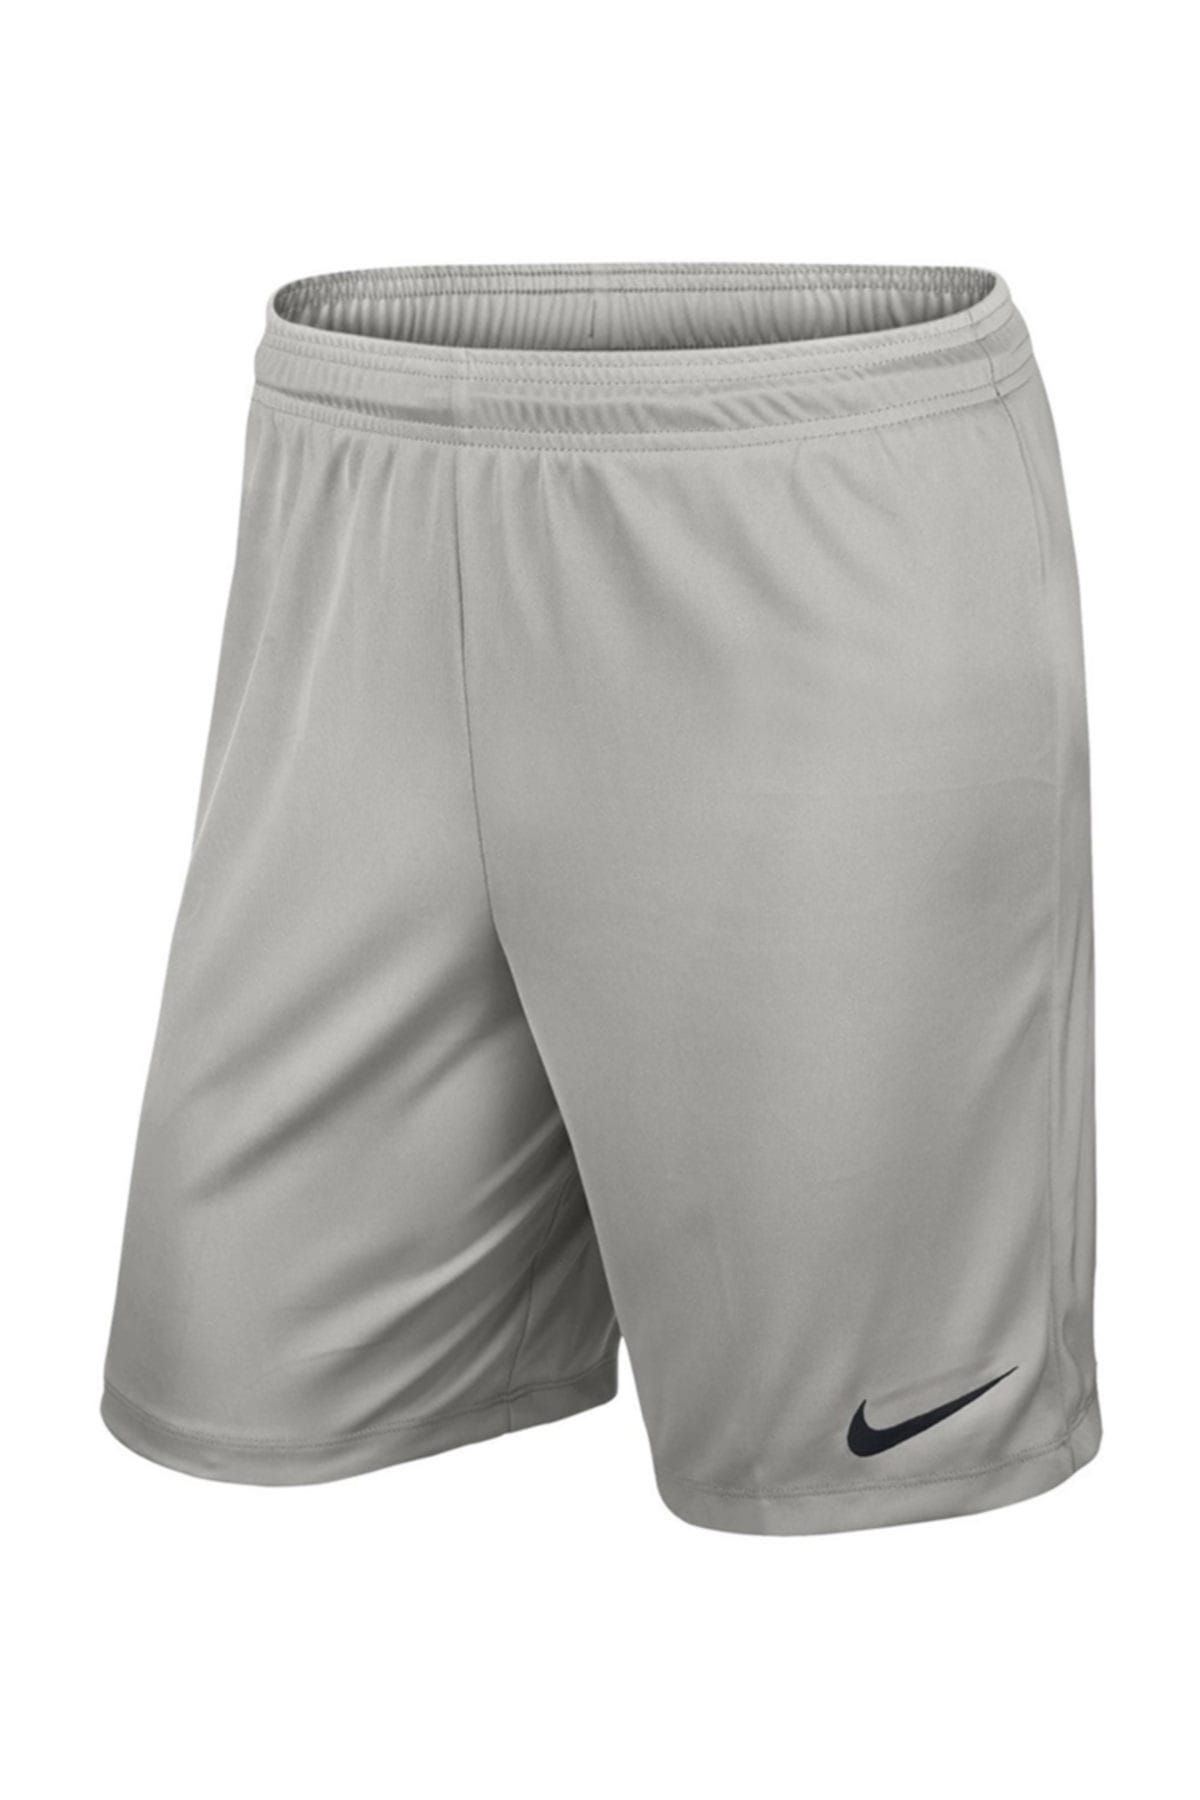 Nike Erkek Şort - Park Knit Dri-Fit Futbol Şortu - 725887-057